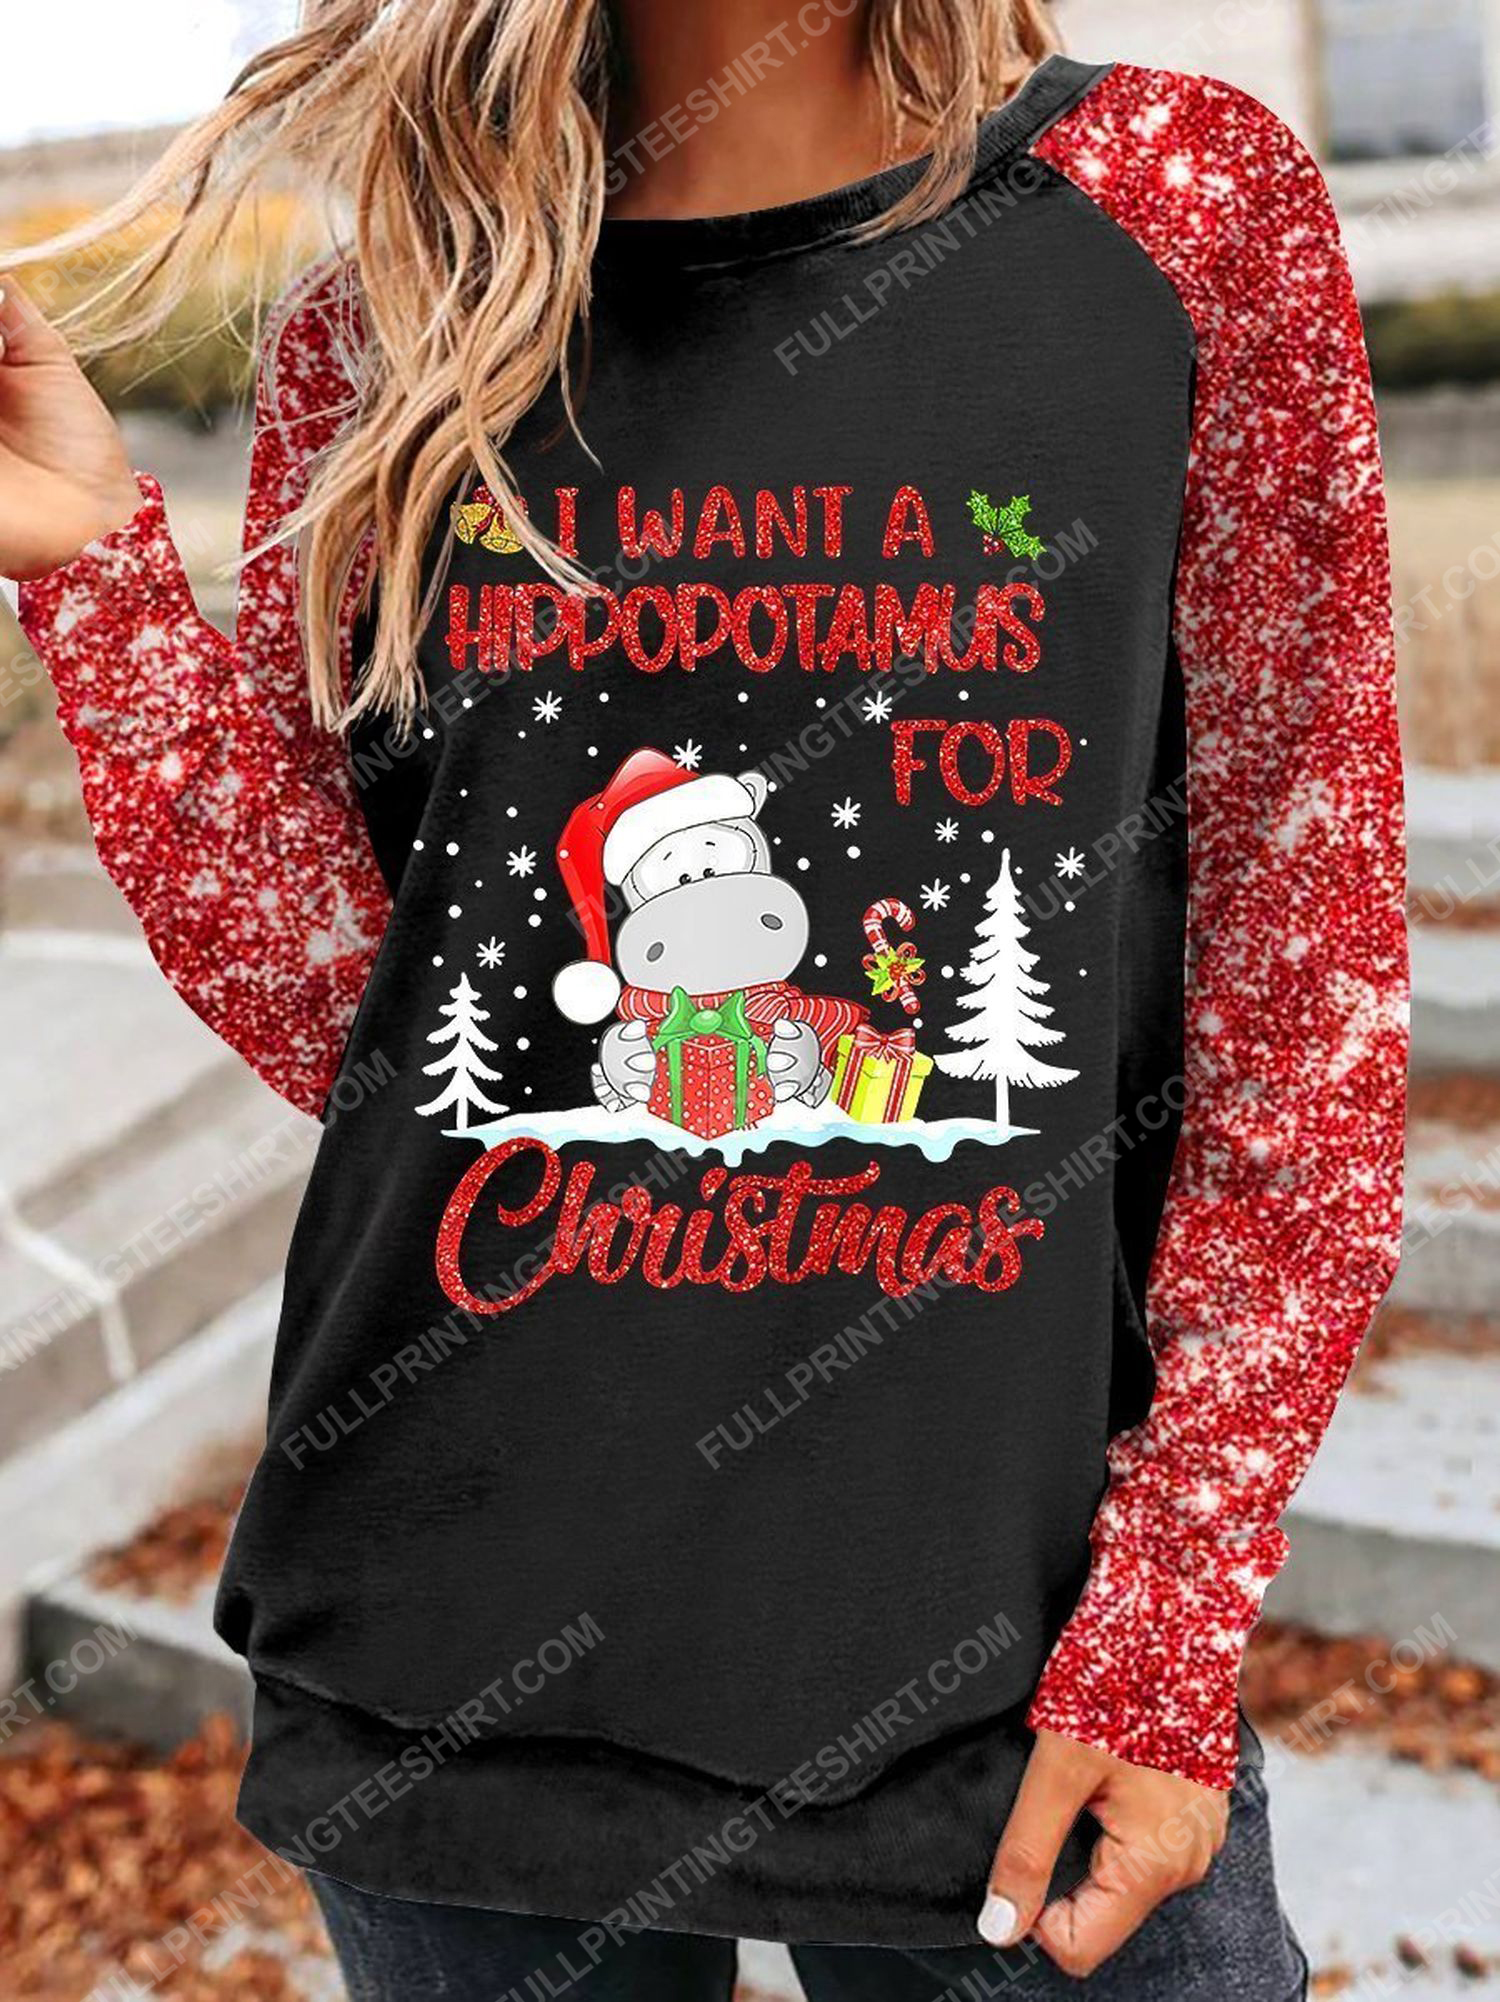 I want a hippopotamus for christmas full print shirt